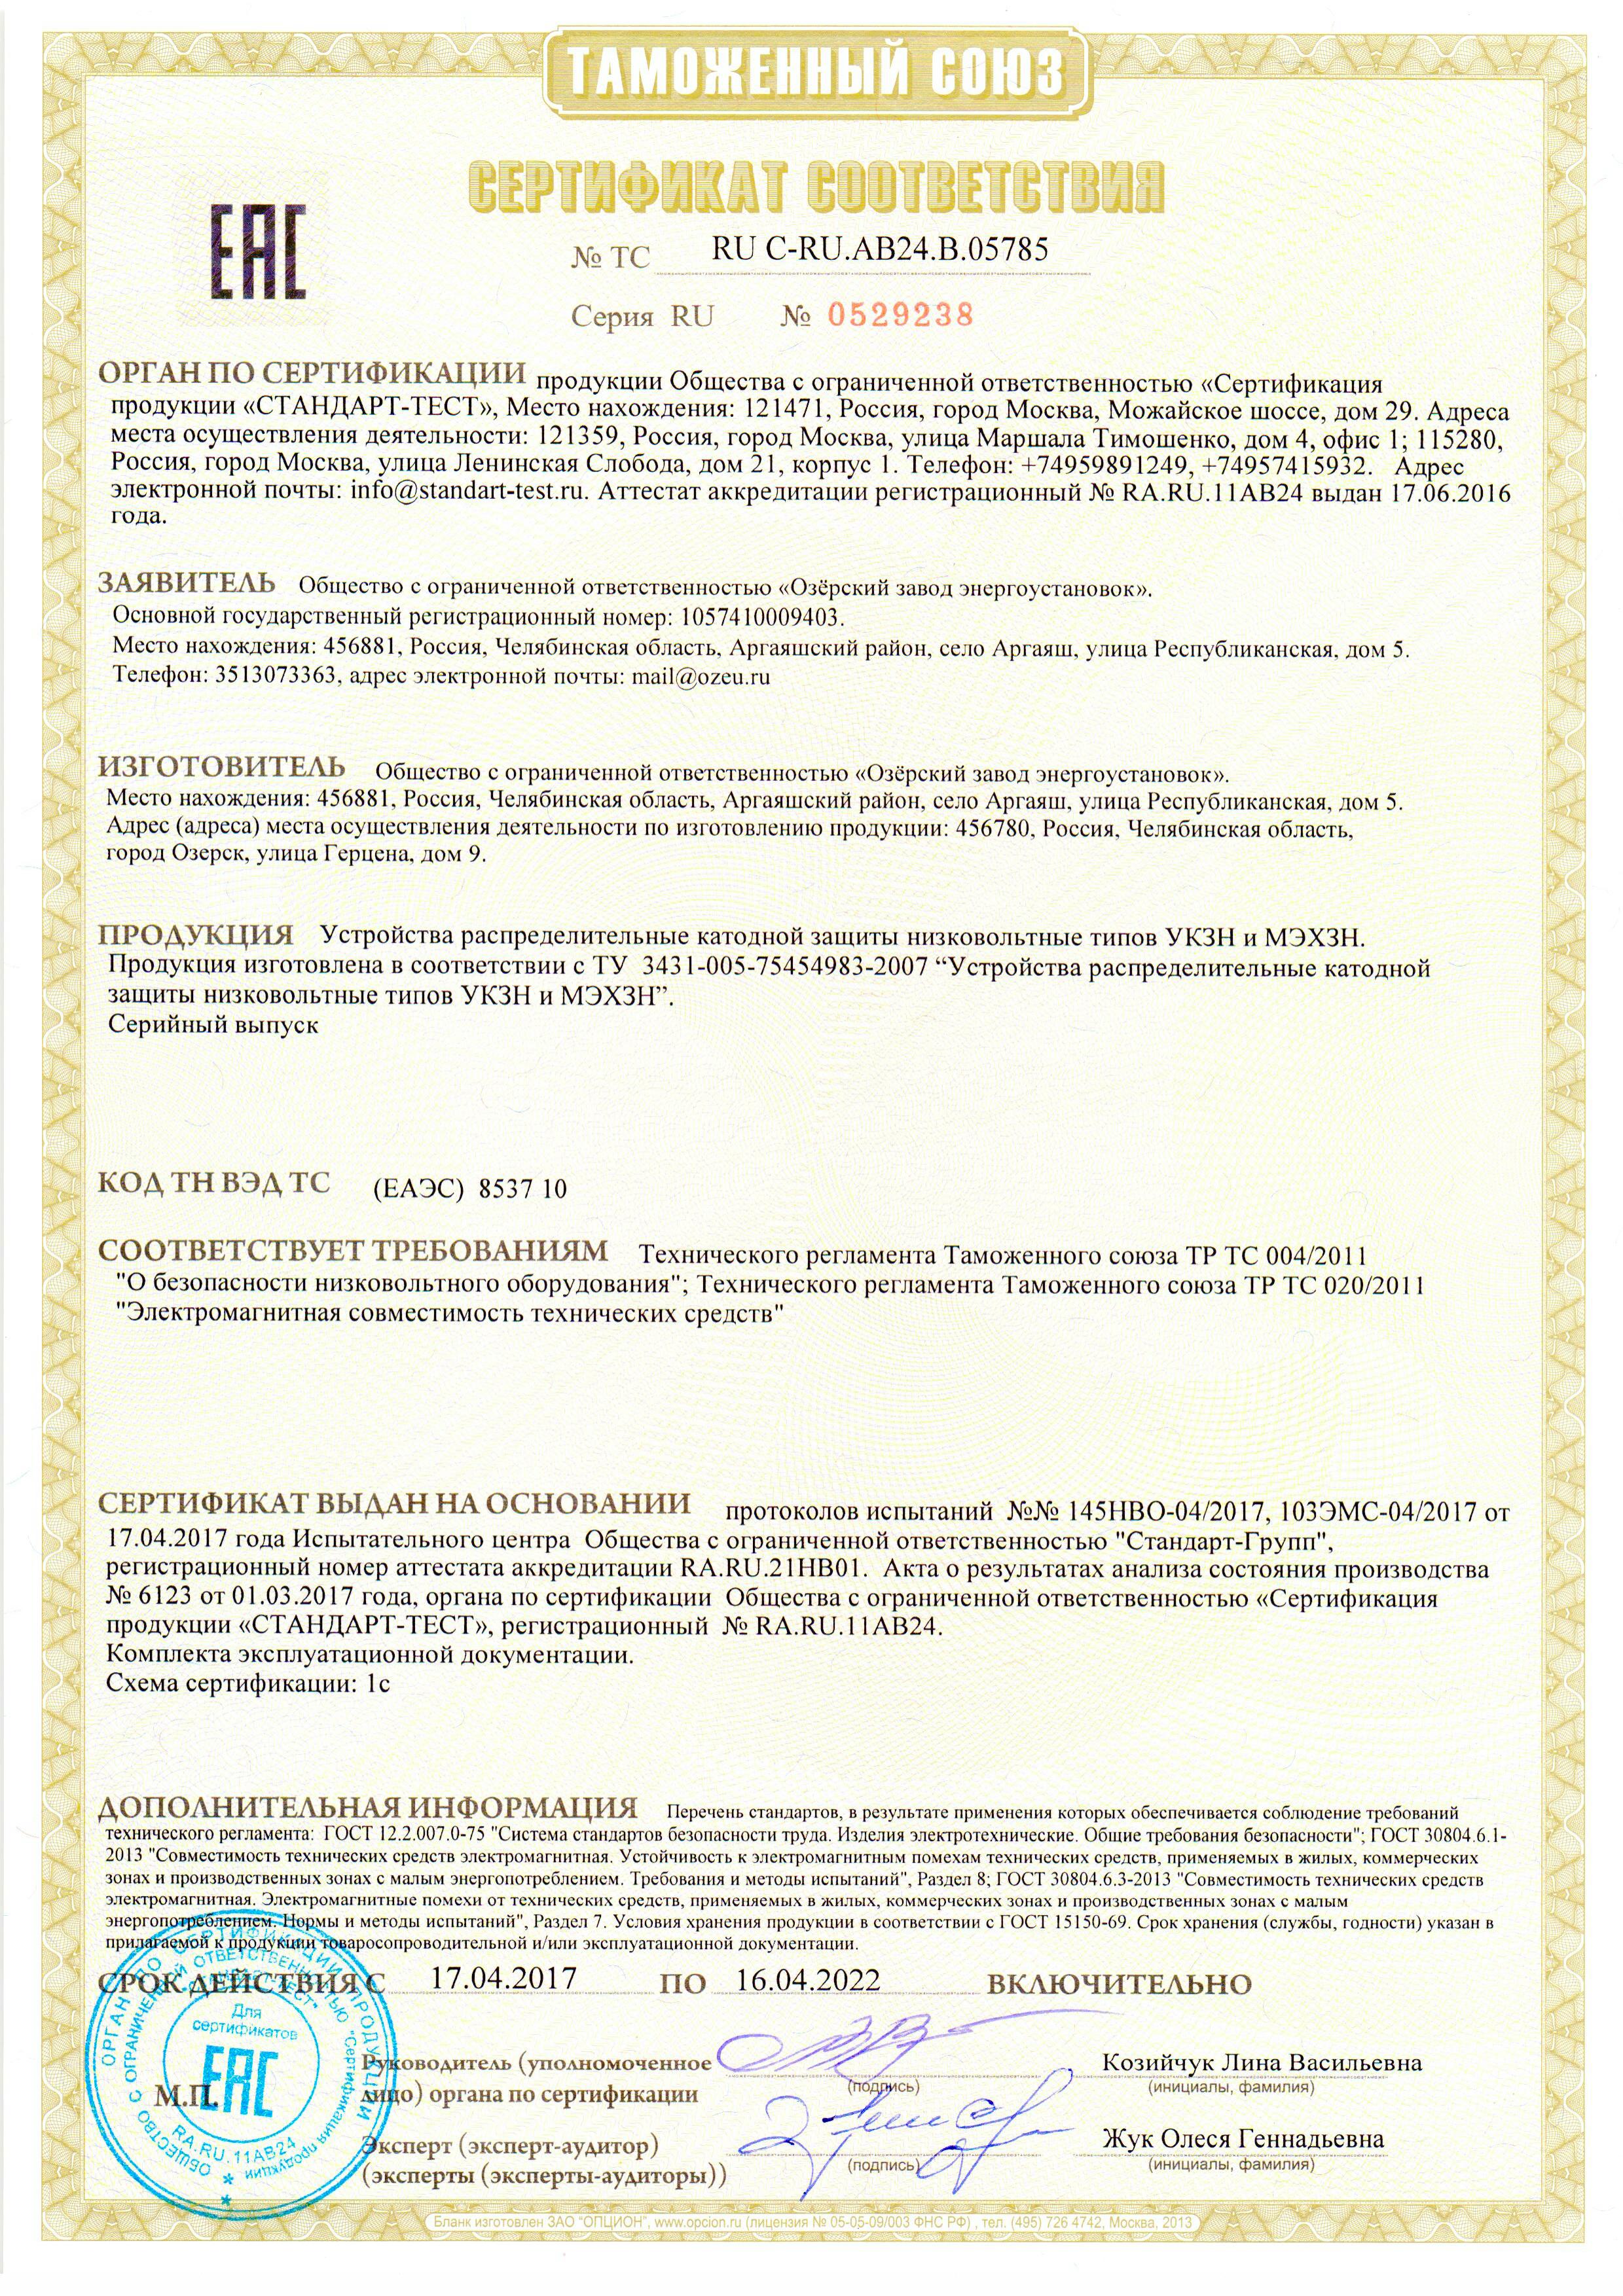 Сертификат ЕАС УКЗН МЭХЗН до 2022_01